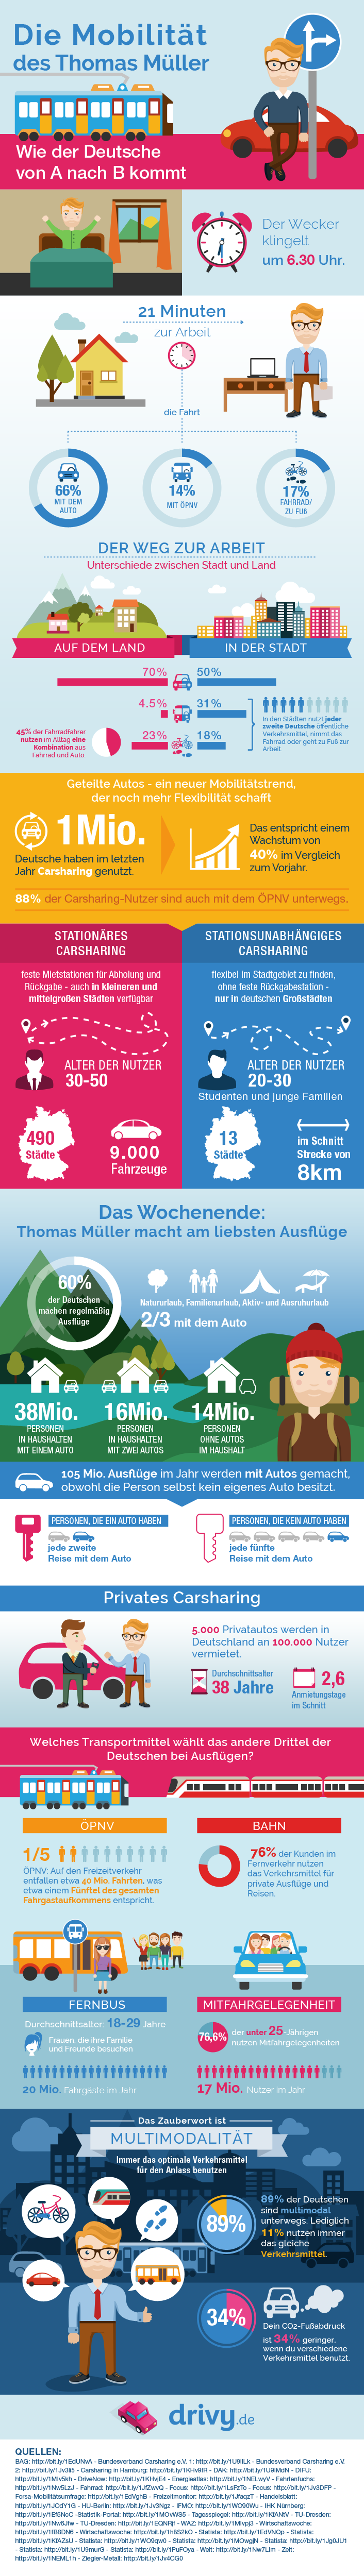 Infografik "Die Mobilität des Thomas Müller"